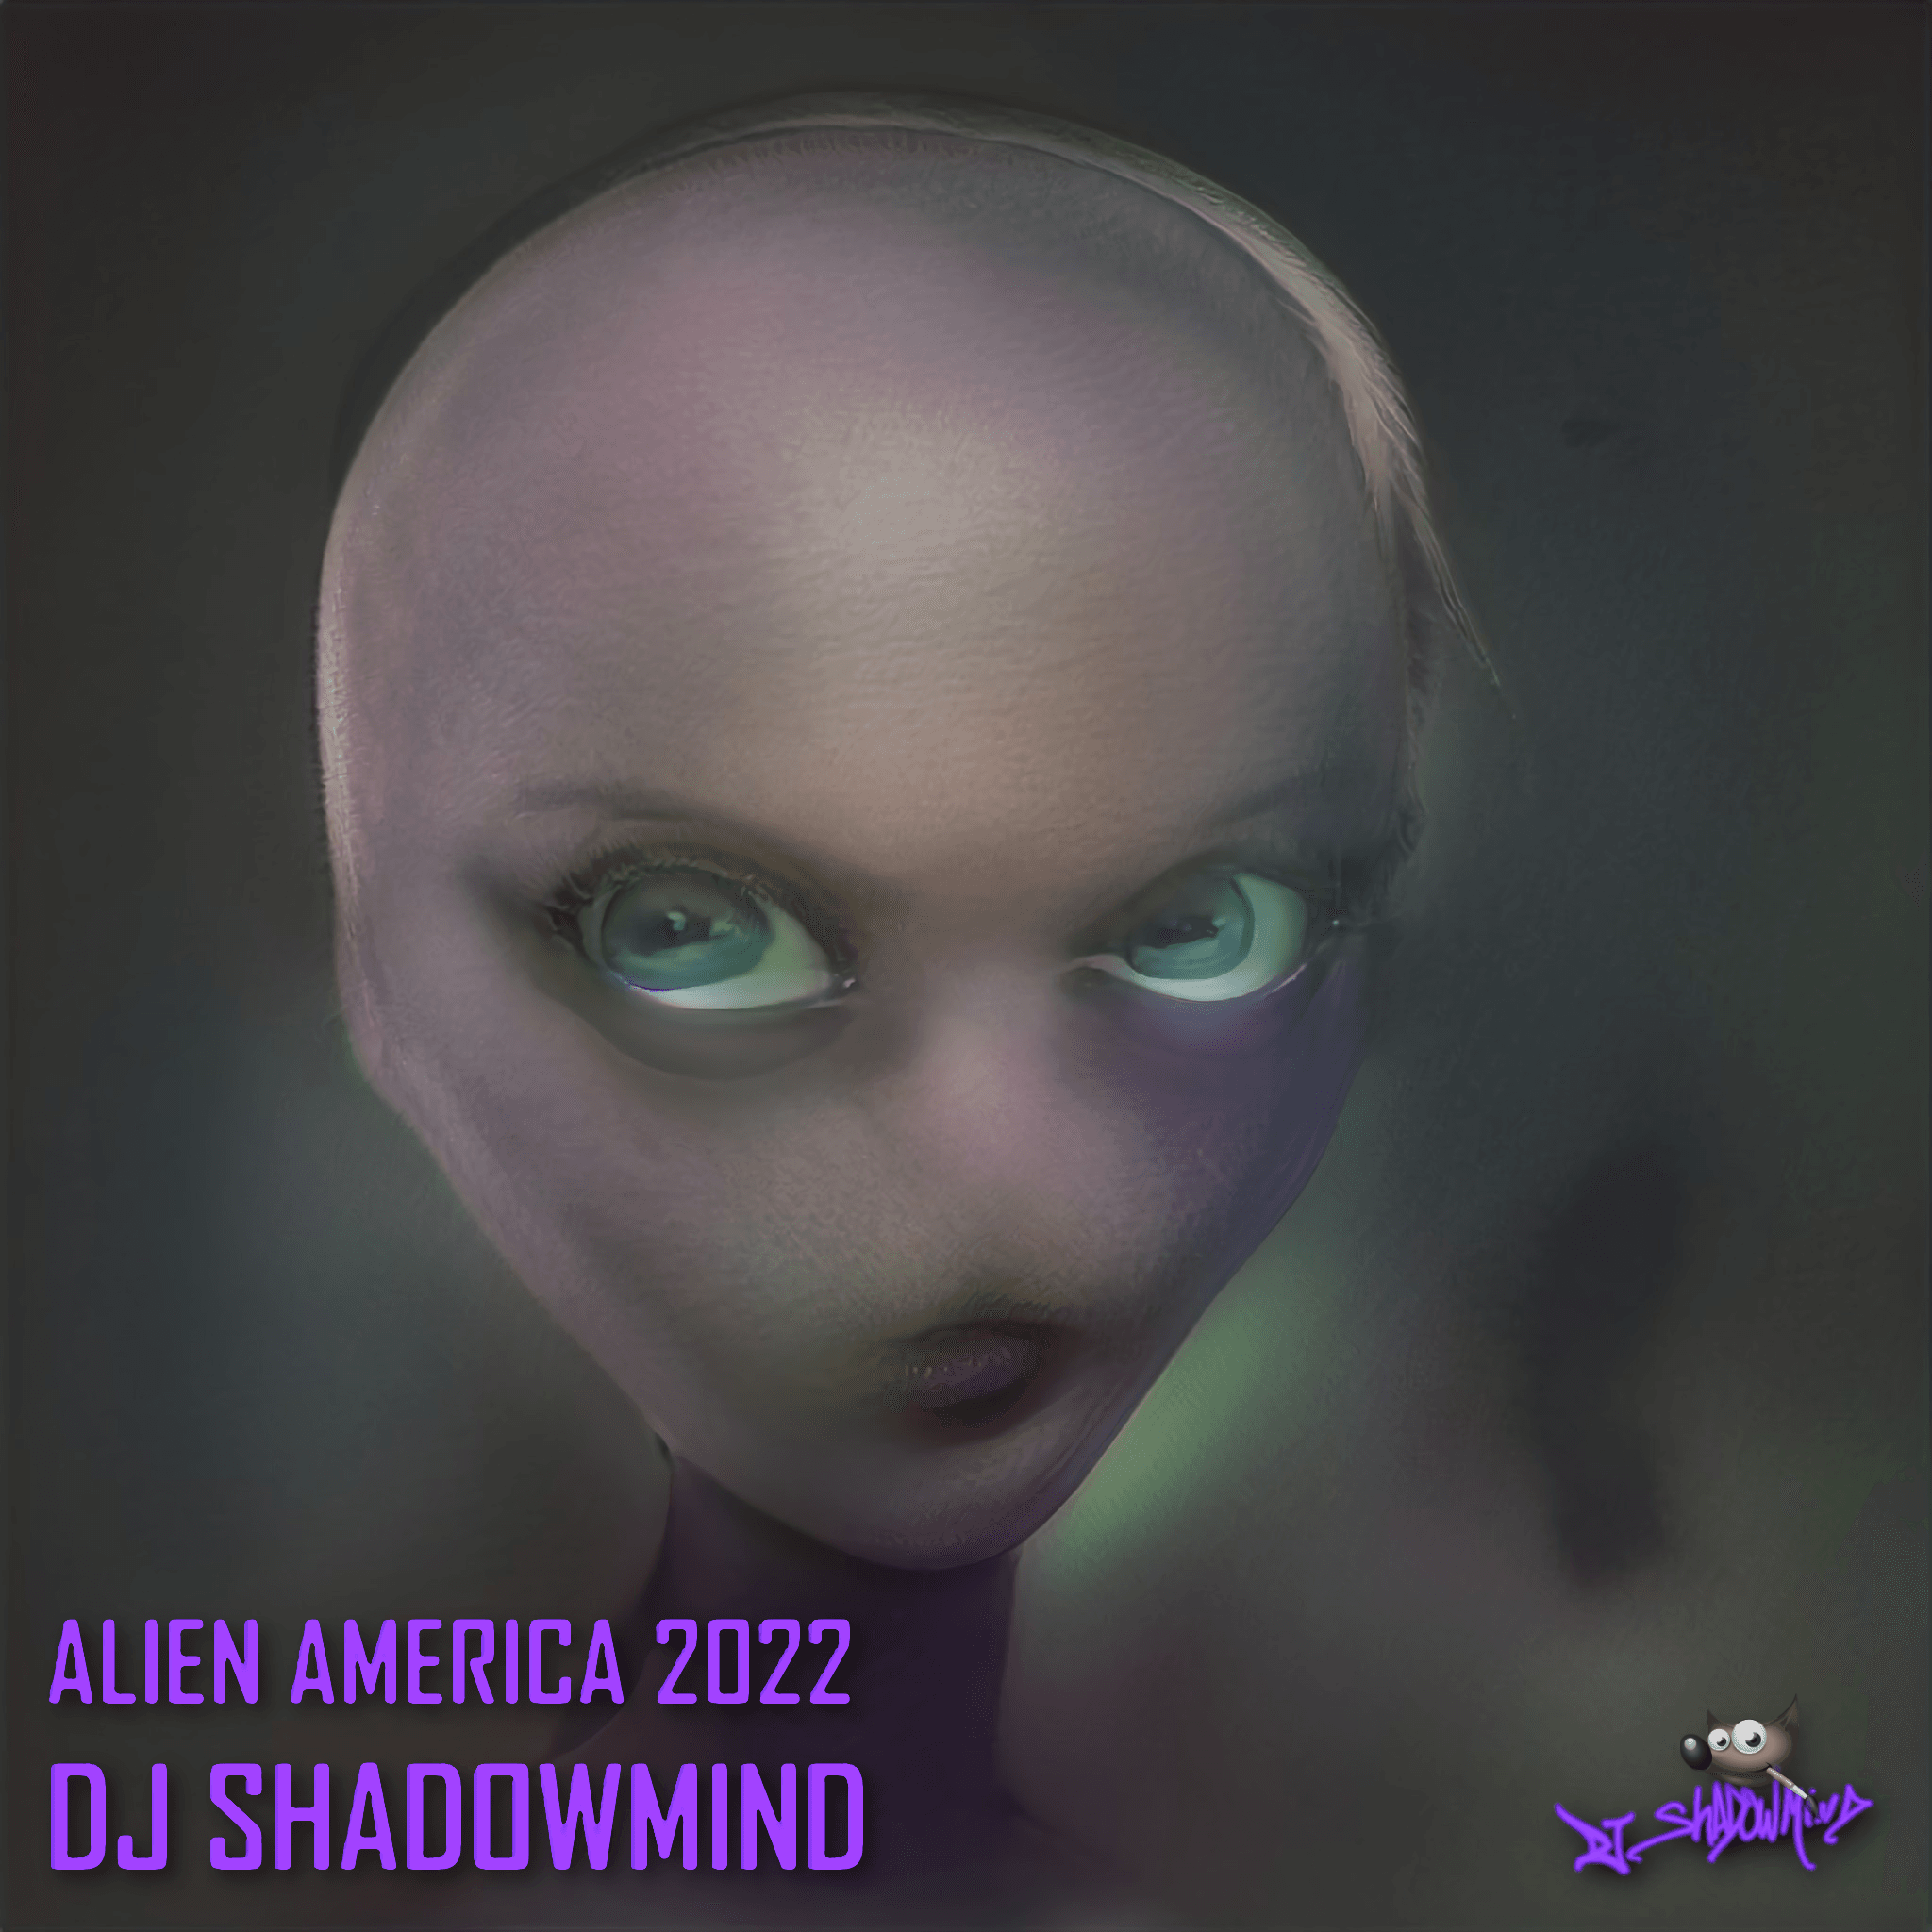 Alien America 2022 - Agent 013